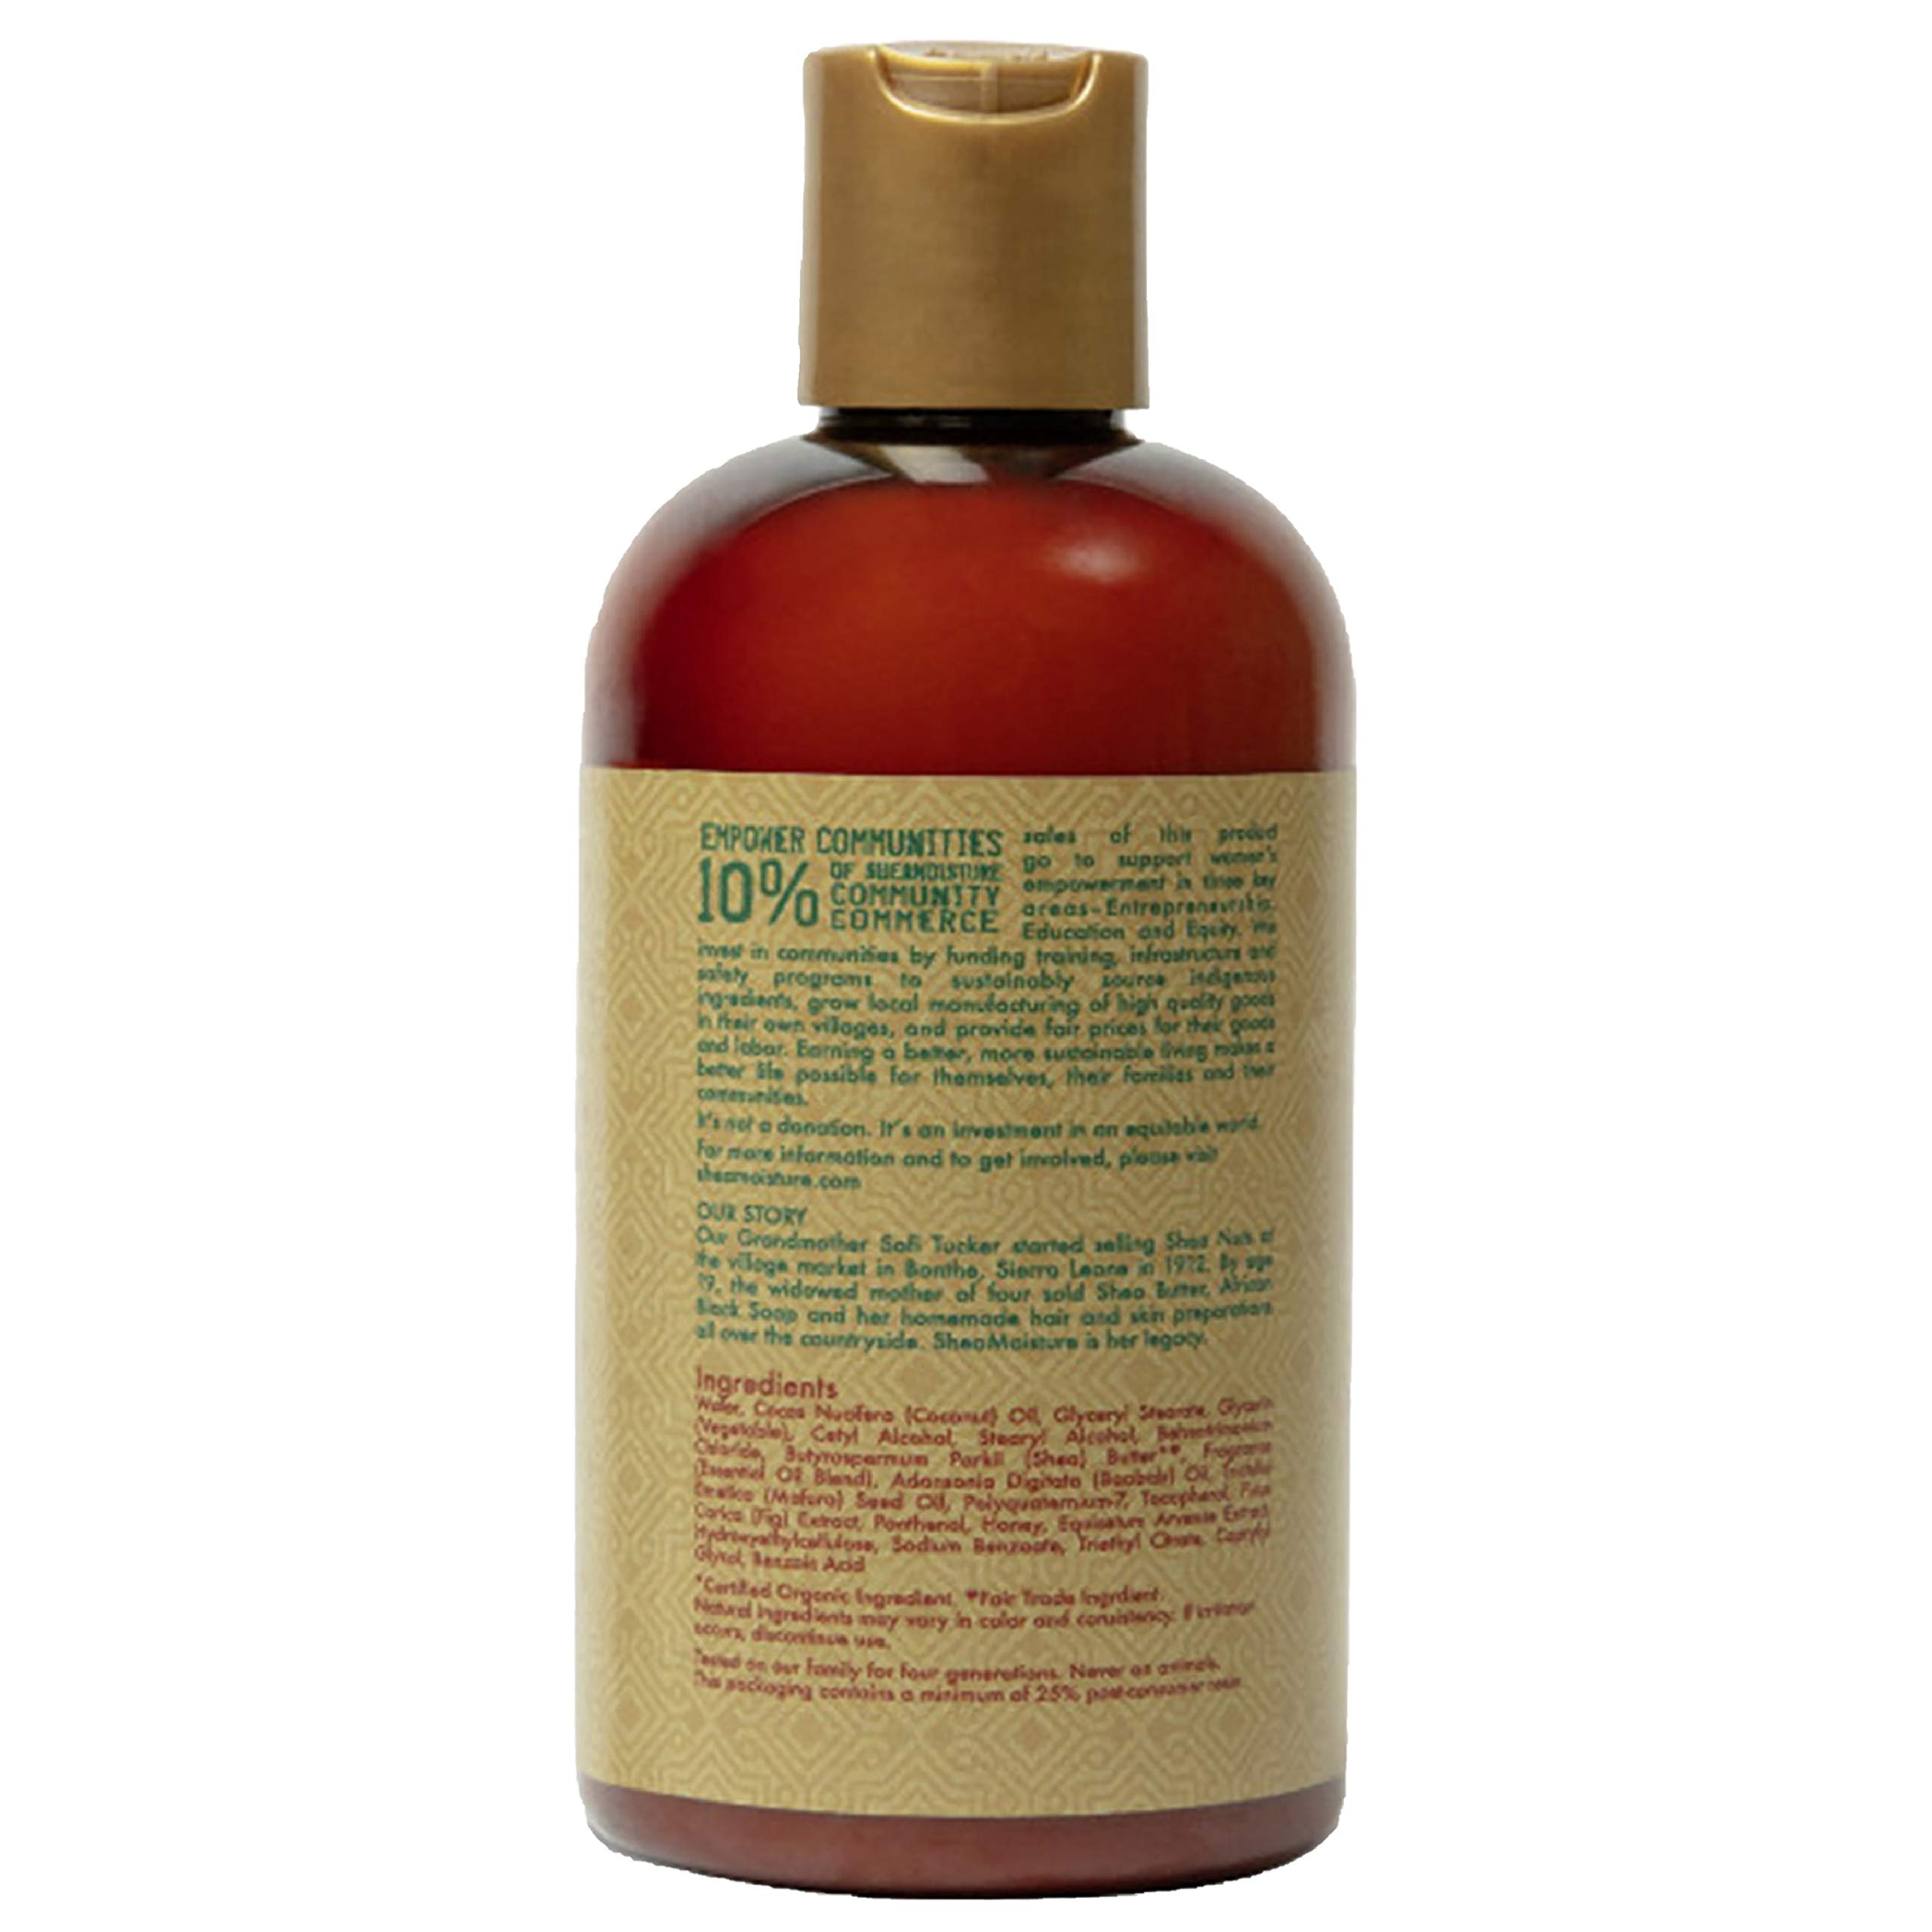 Sheamoisture Hydration Hair Milk for Dry Hair Manuka Honey and Mafura Oil to Hydrate and Style Hair 8 oz